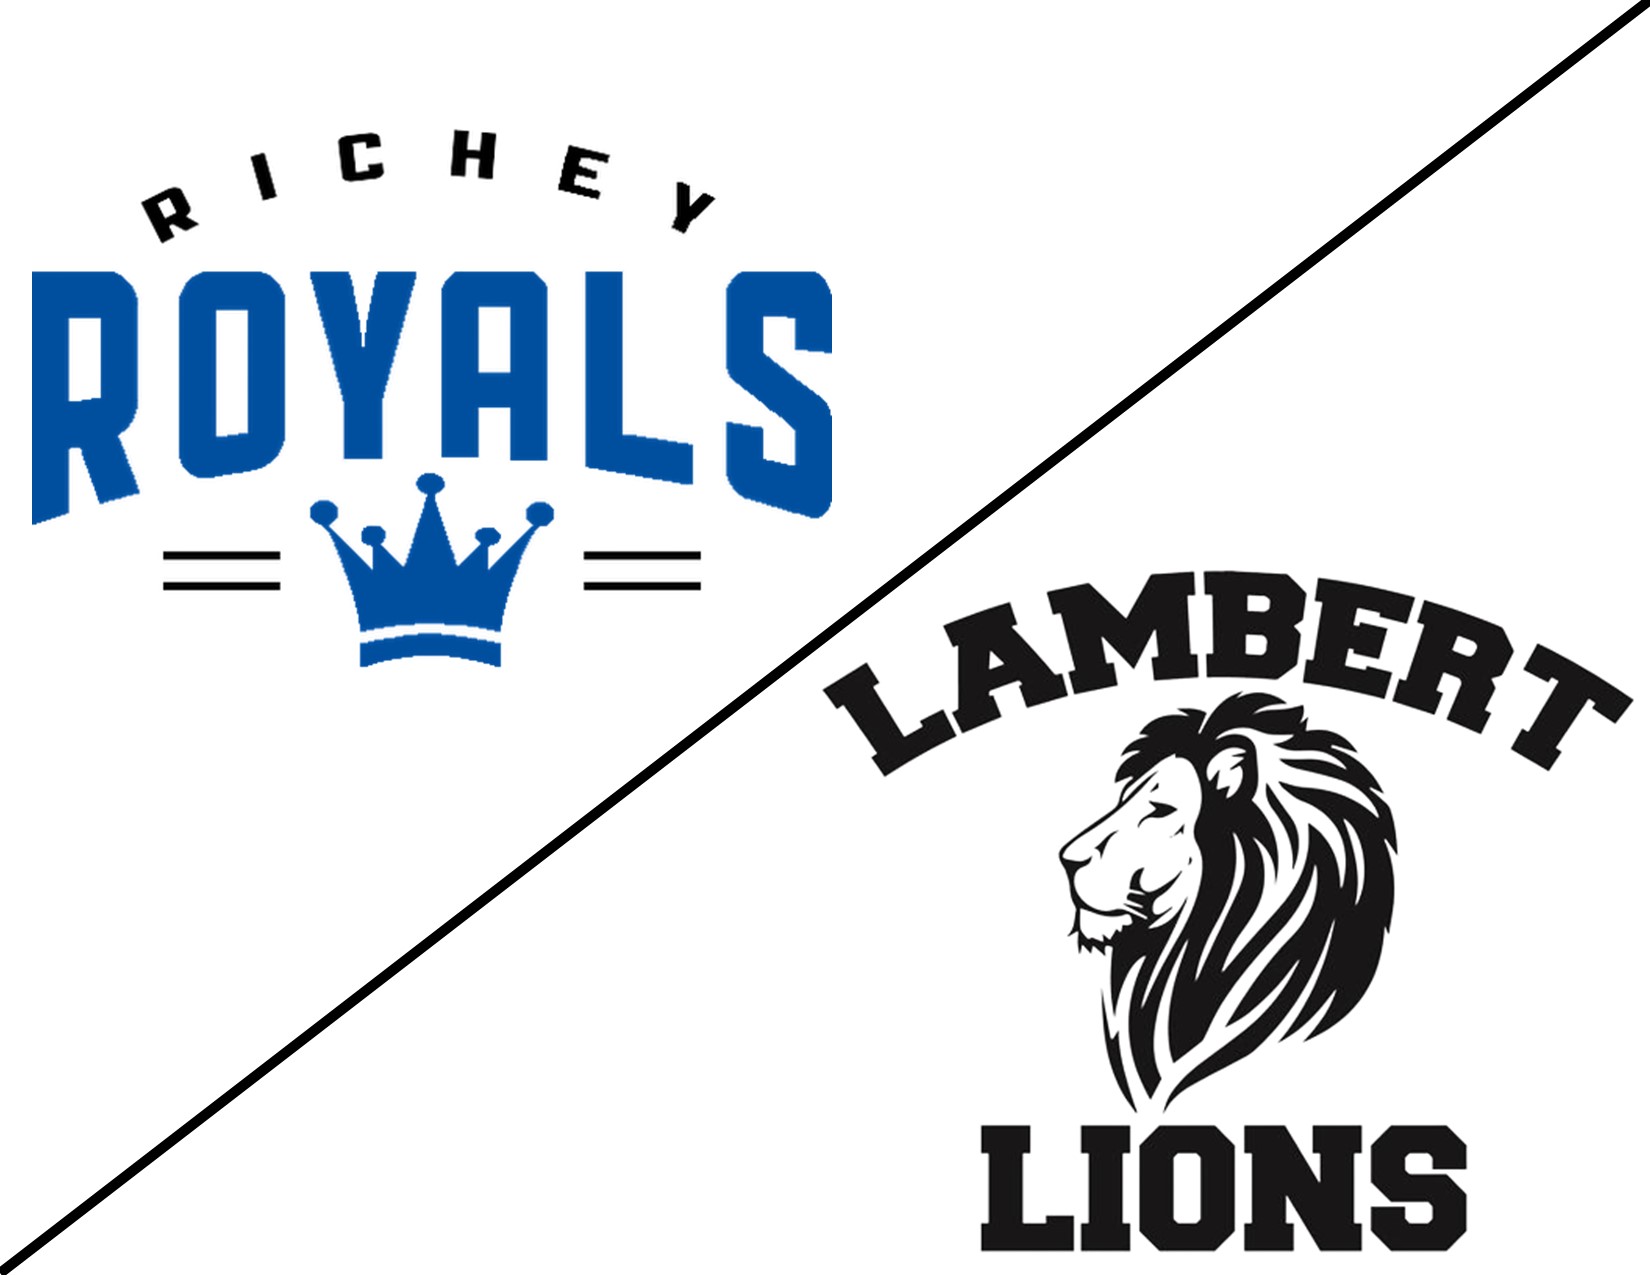 Richey Royals-Lambert Lions Logo